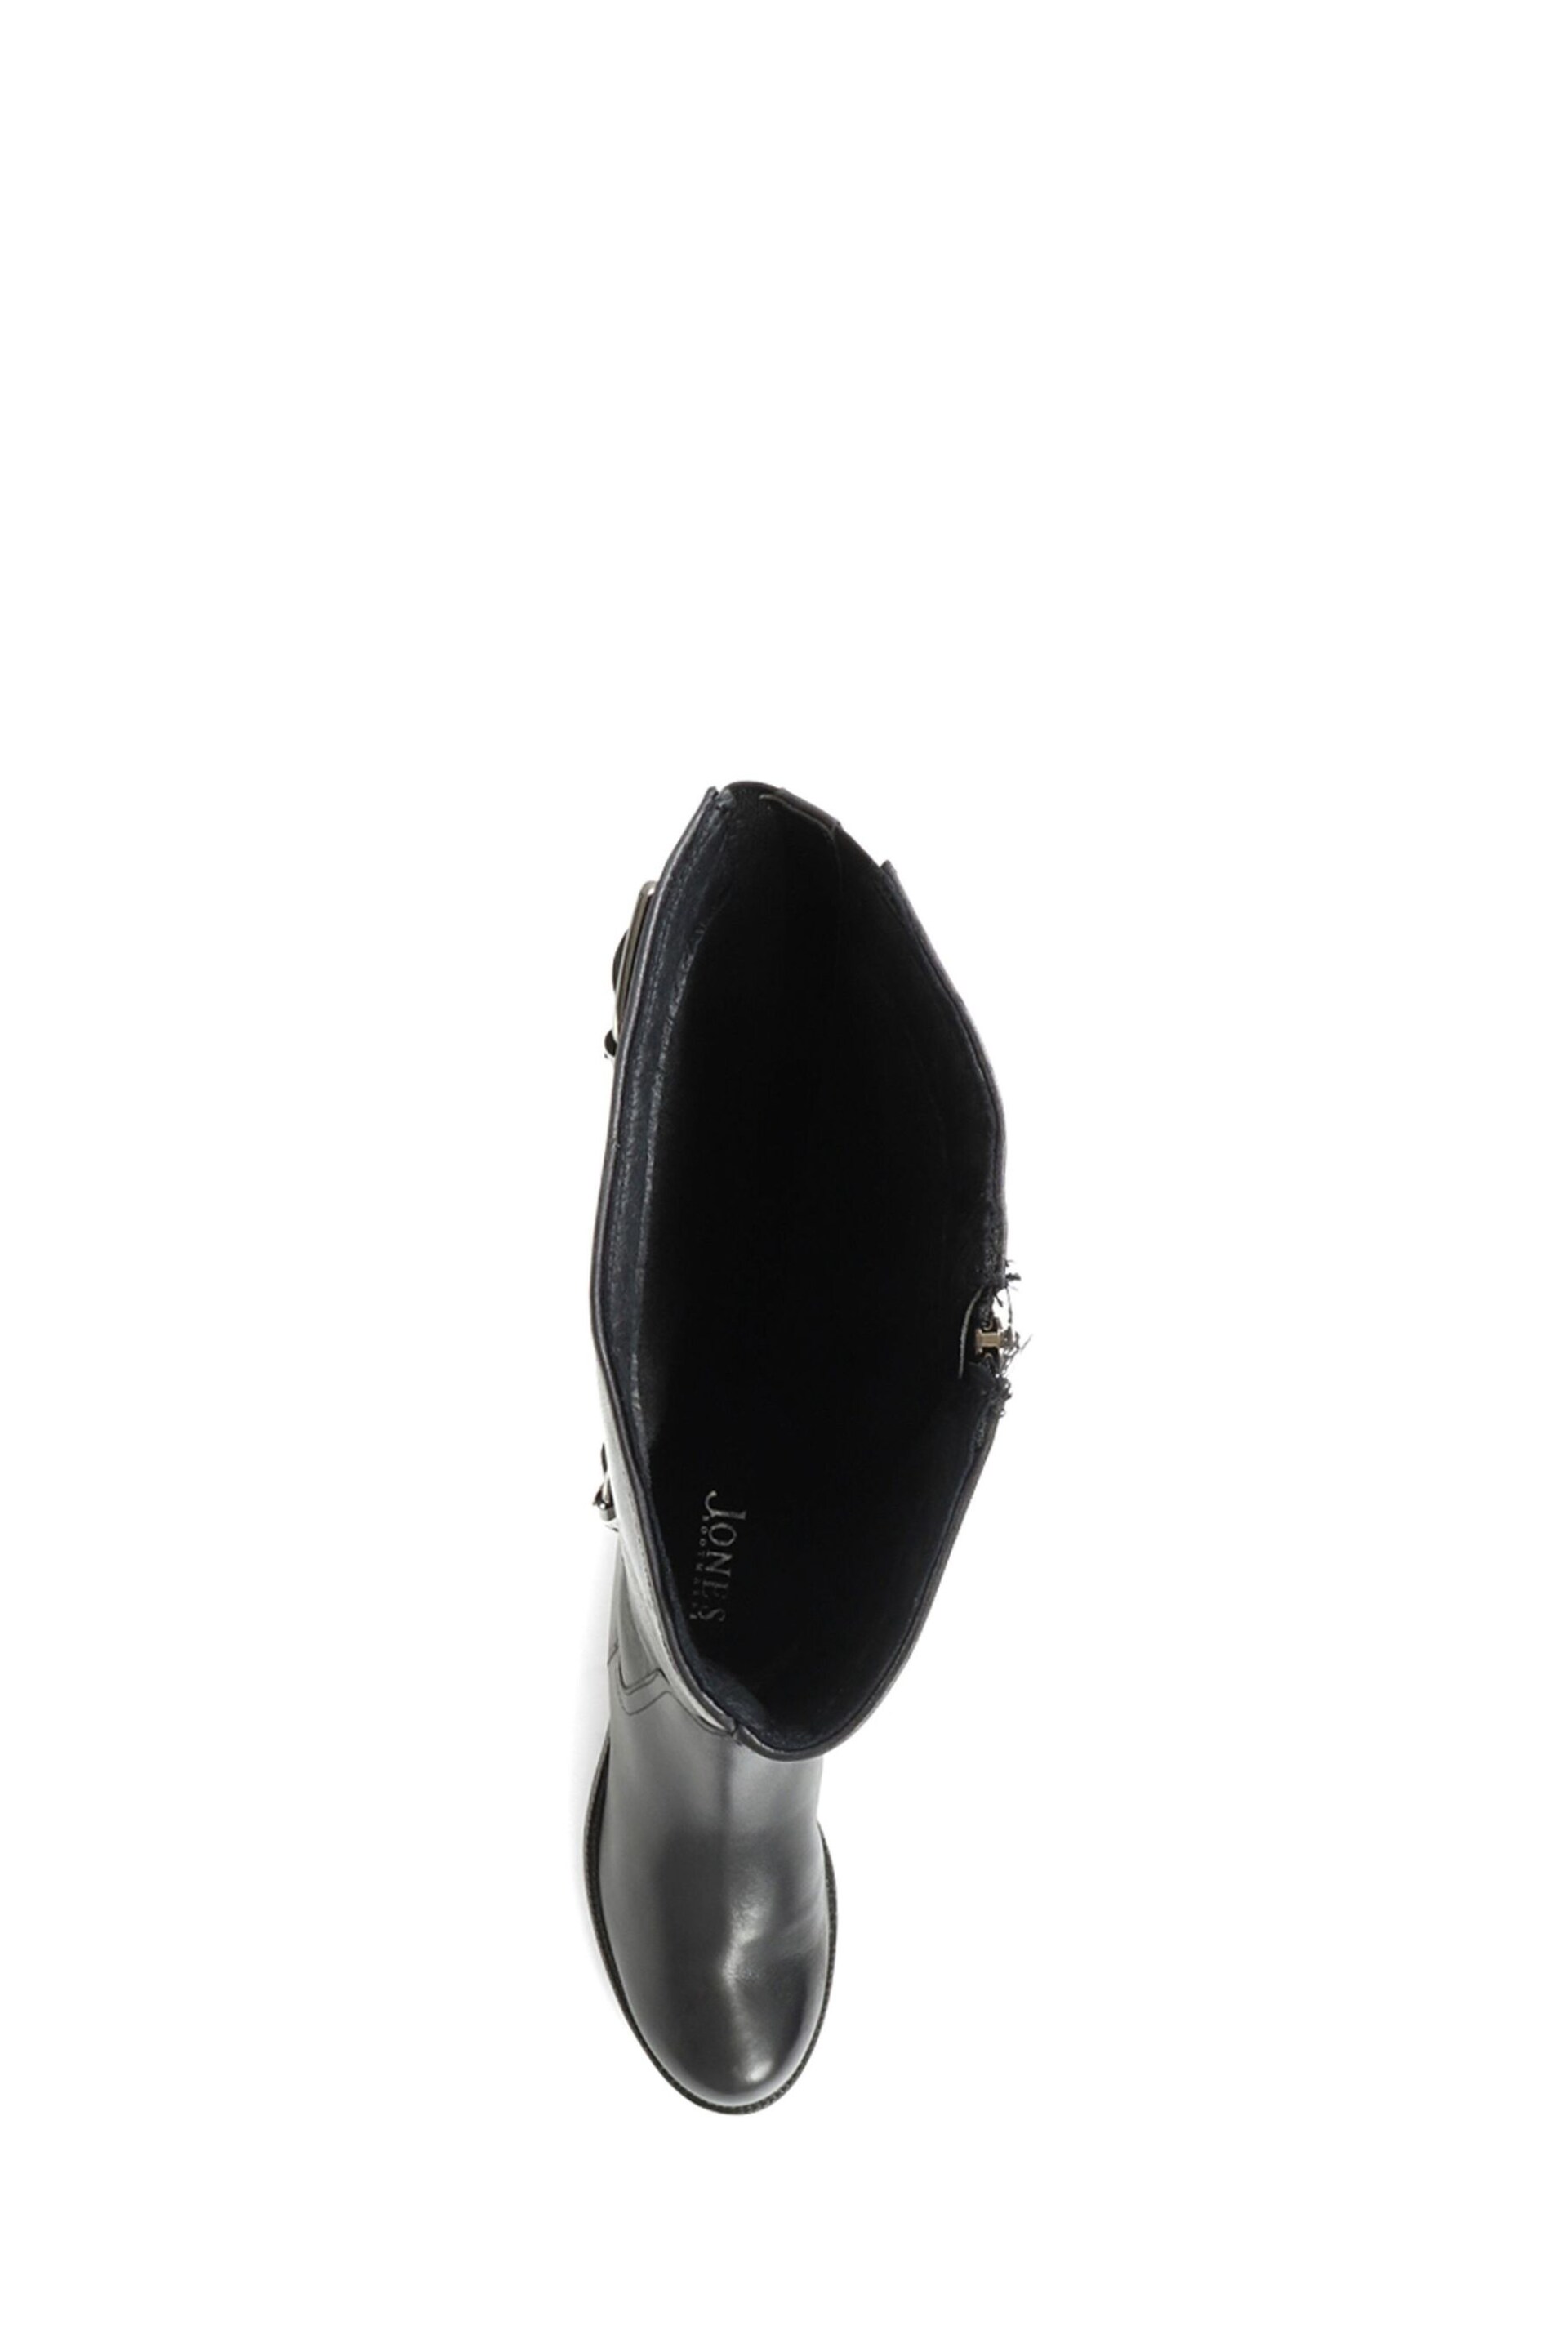 Jones Bootmaker Carrara Wide Calf Fit Leather Black Boots - Image 3 of 5